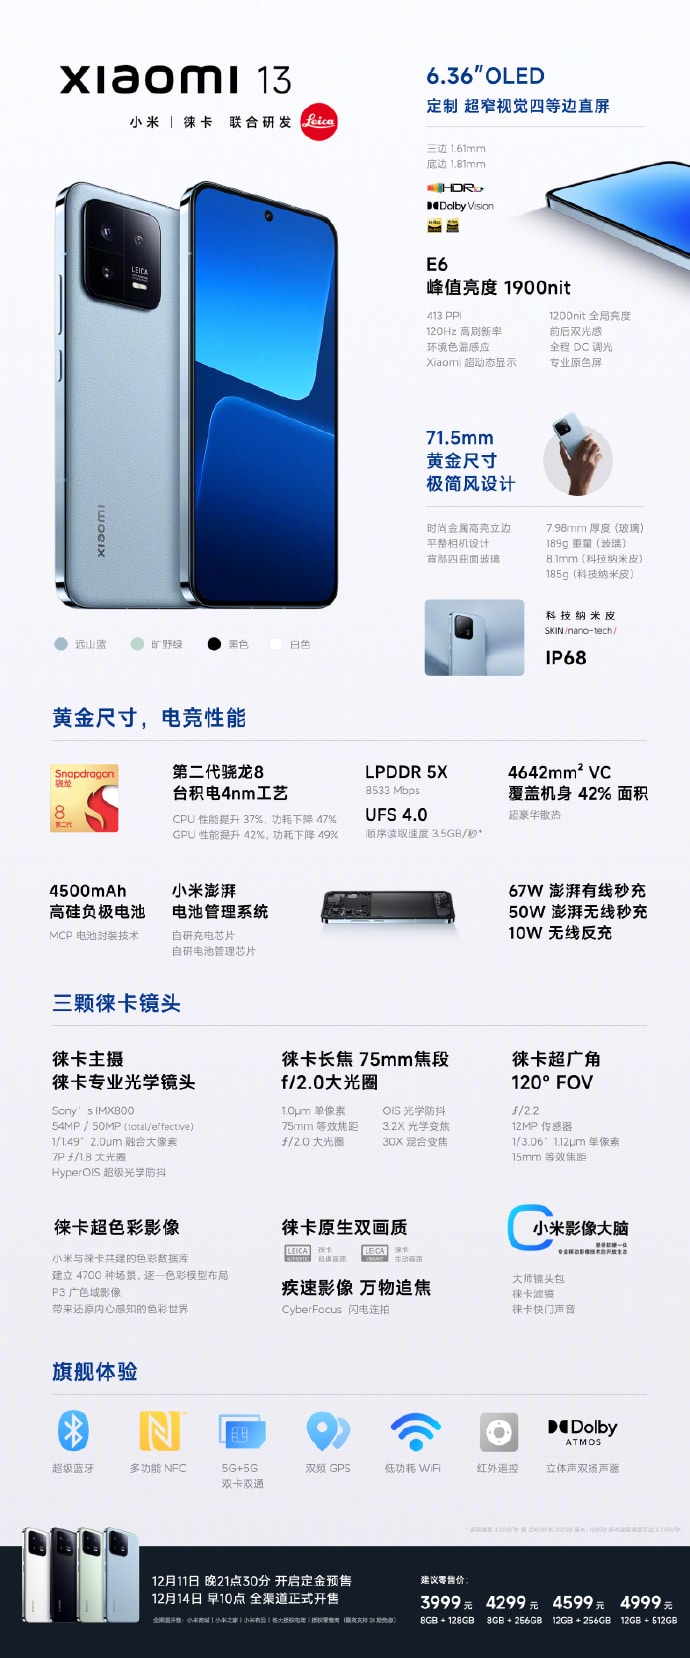 Xiaomi Mi 13 specs